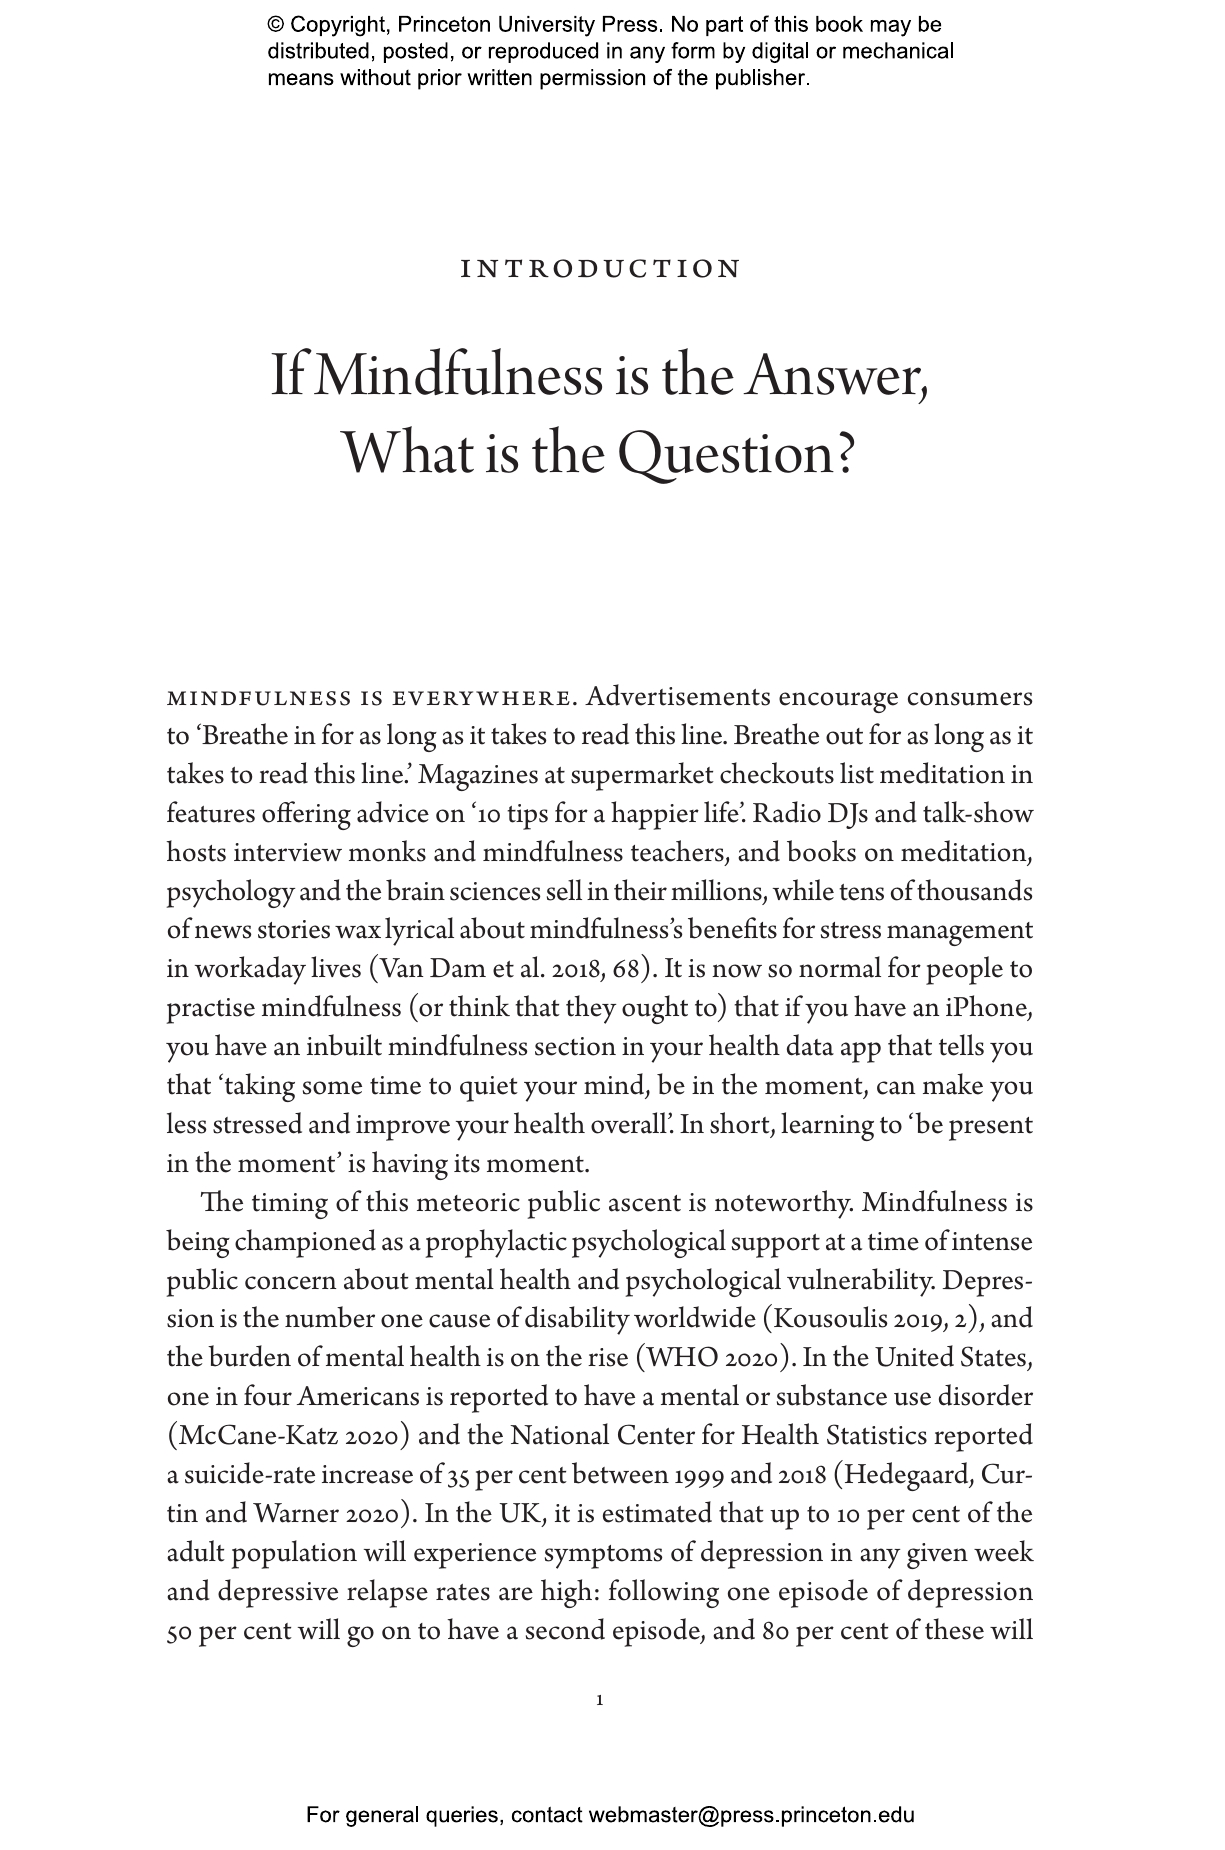 Making a Mindful Nation  Princeton University Press